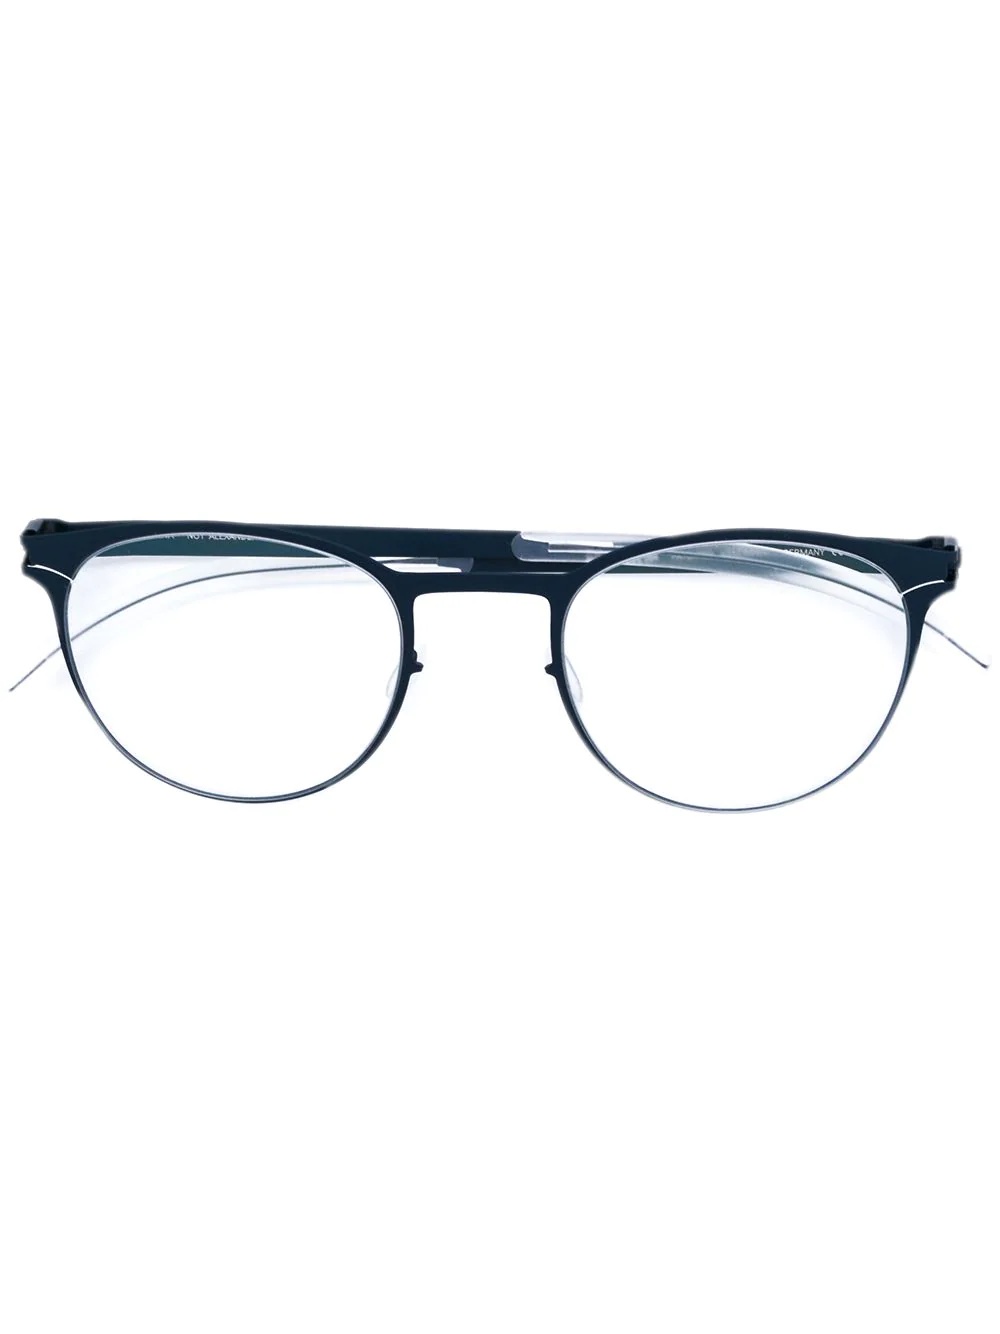 Alexander glasses - 1